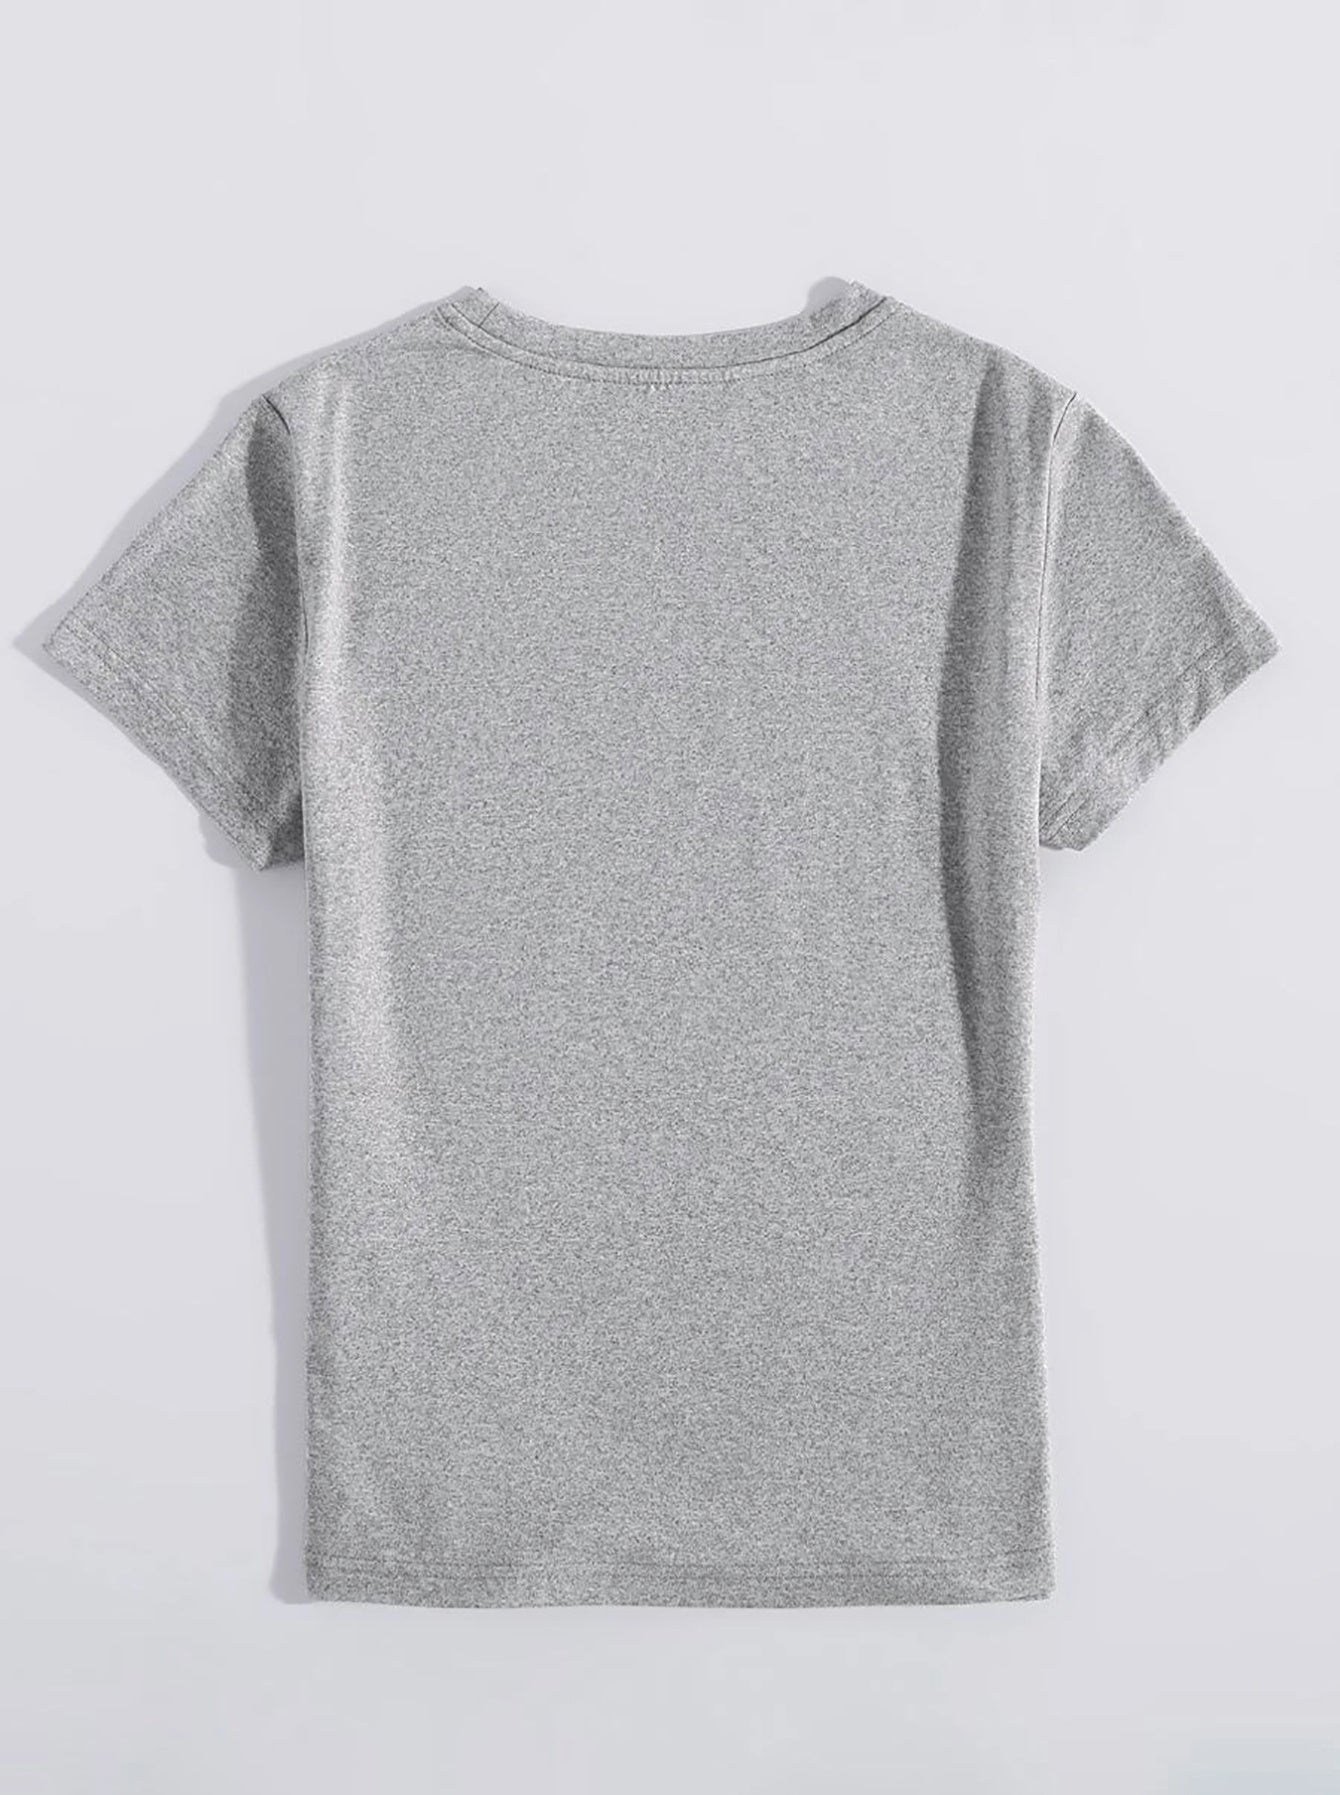 Women Letter Graphic Round Neck Short Sleeve T-Shirt